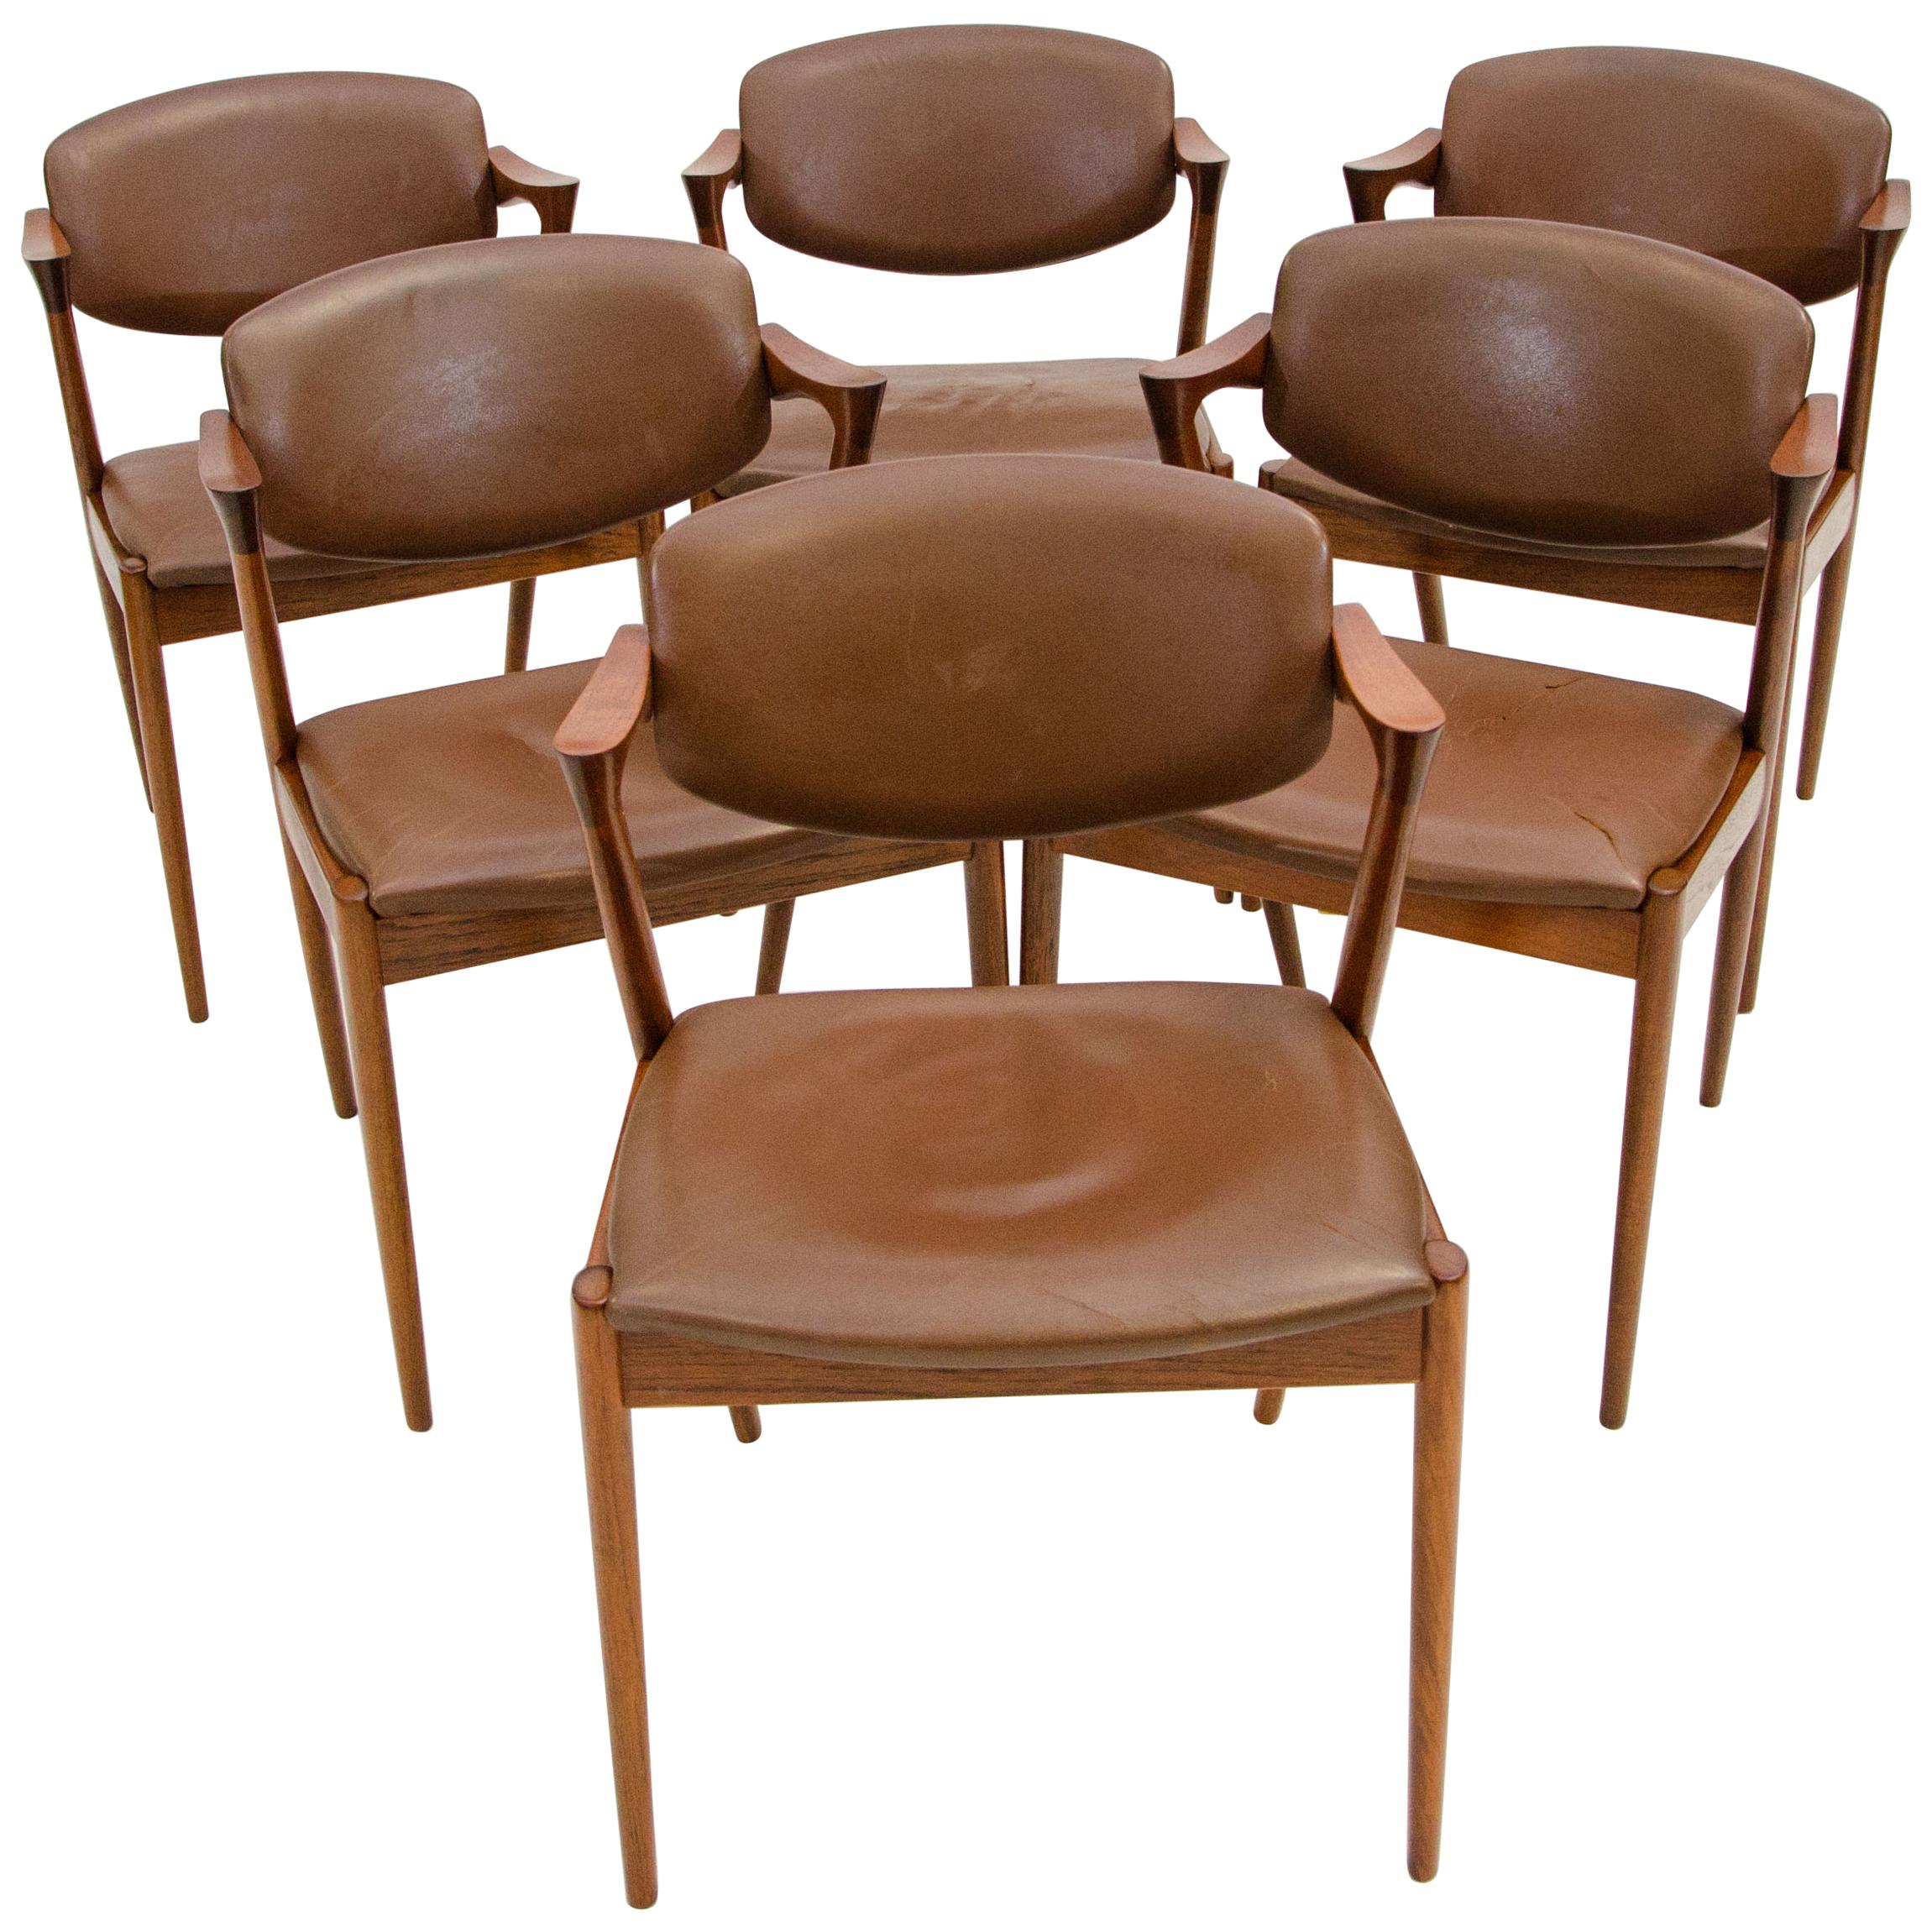 Set of Six Danish Teak Dining Chairs, Kai Kristiansen, Model 42